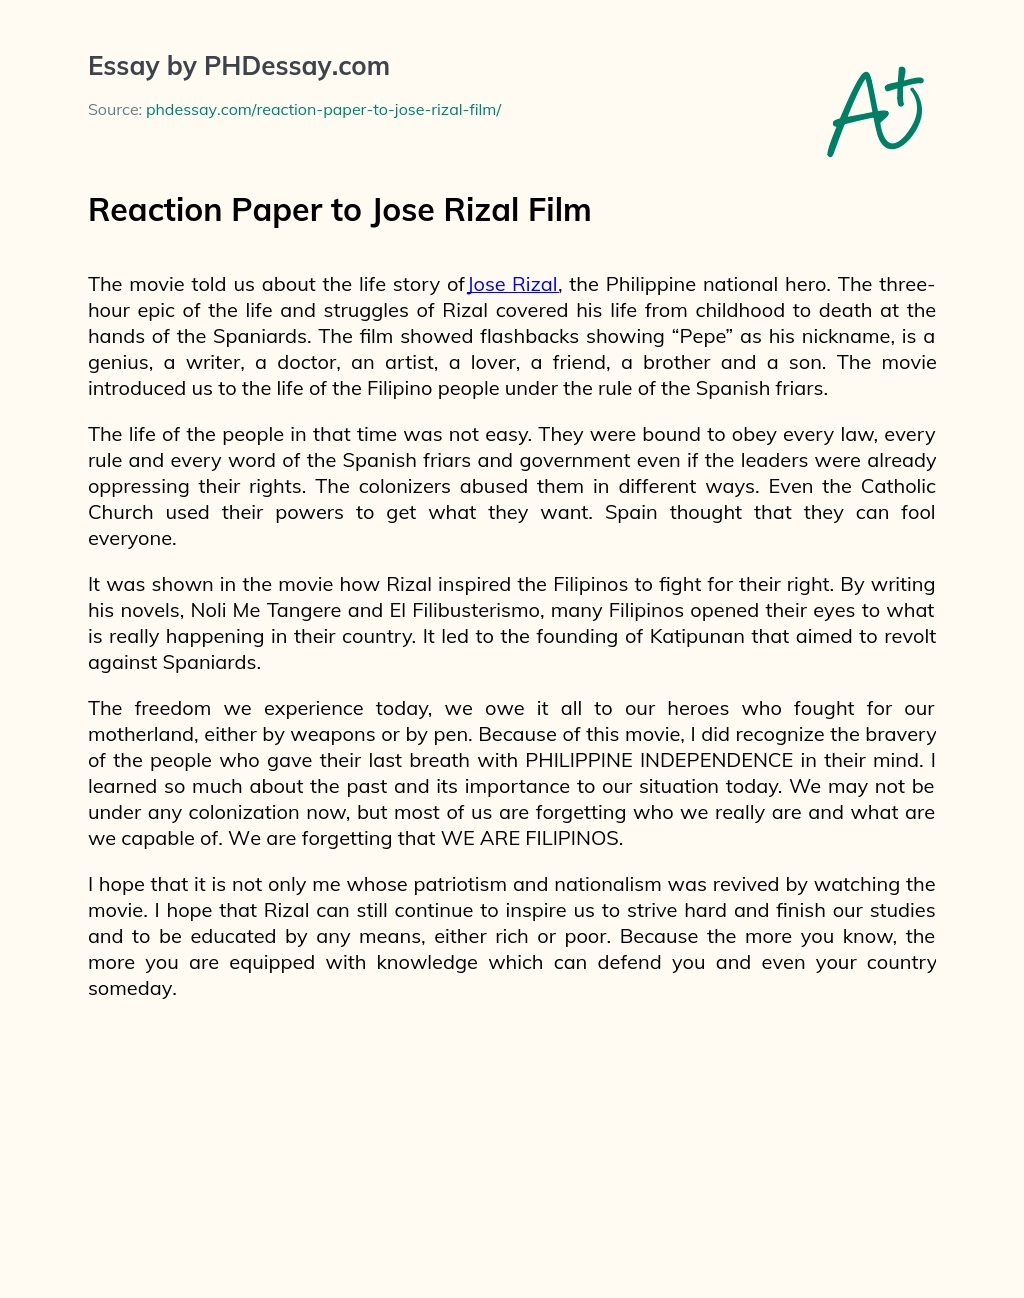 Reaction Paper to Jose Rizal Film essay